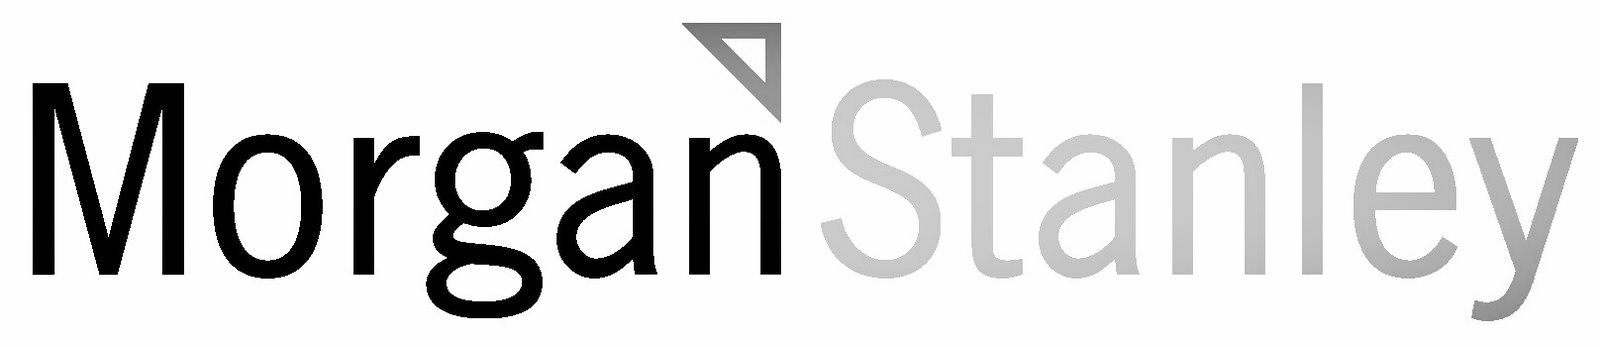 Morgan-Stanley-logo.jpg